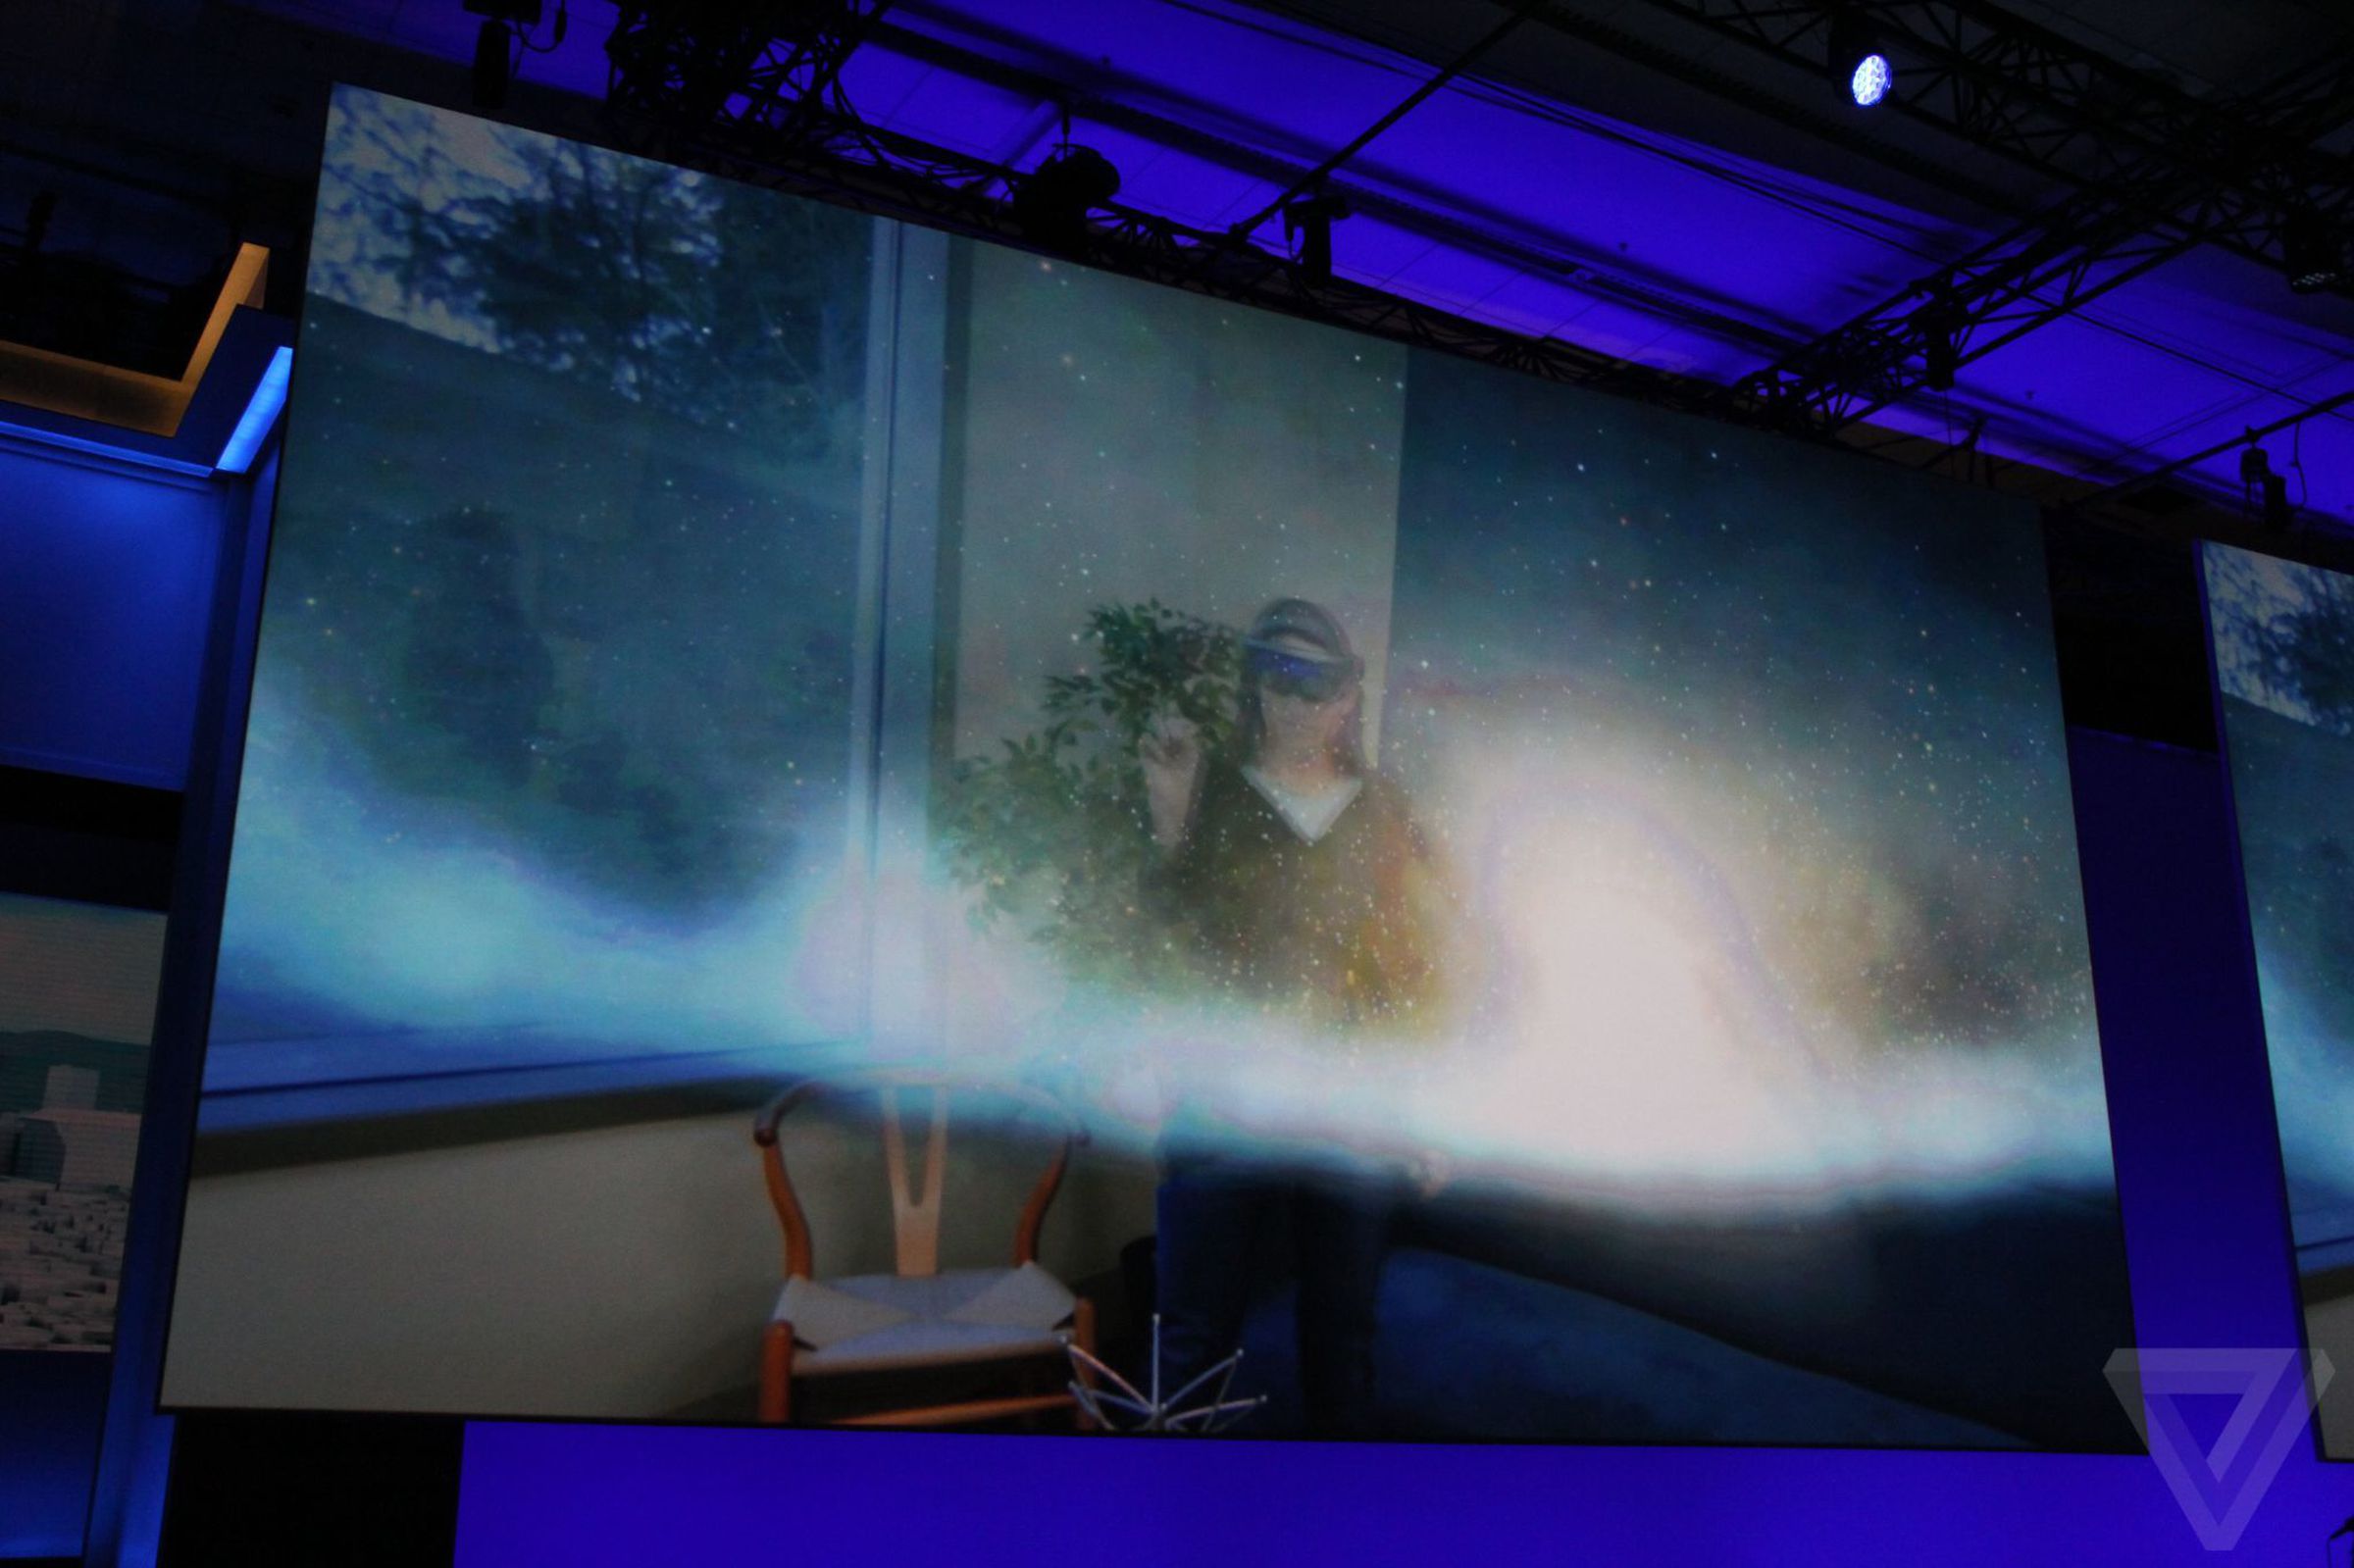 HoloLens announcement photos